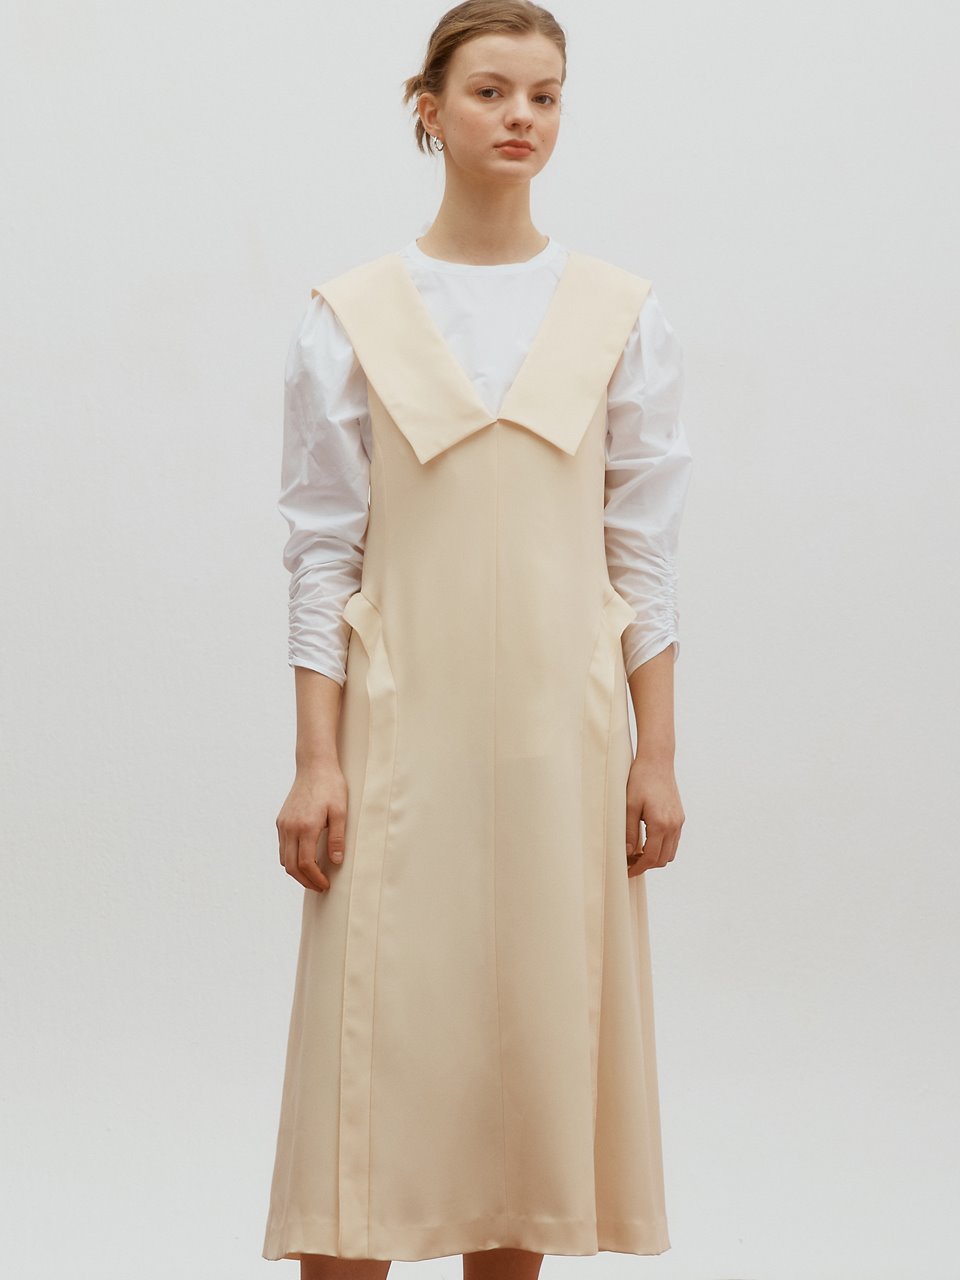 [REFURB SALE] Collar point layered dress - Butter